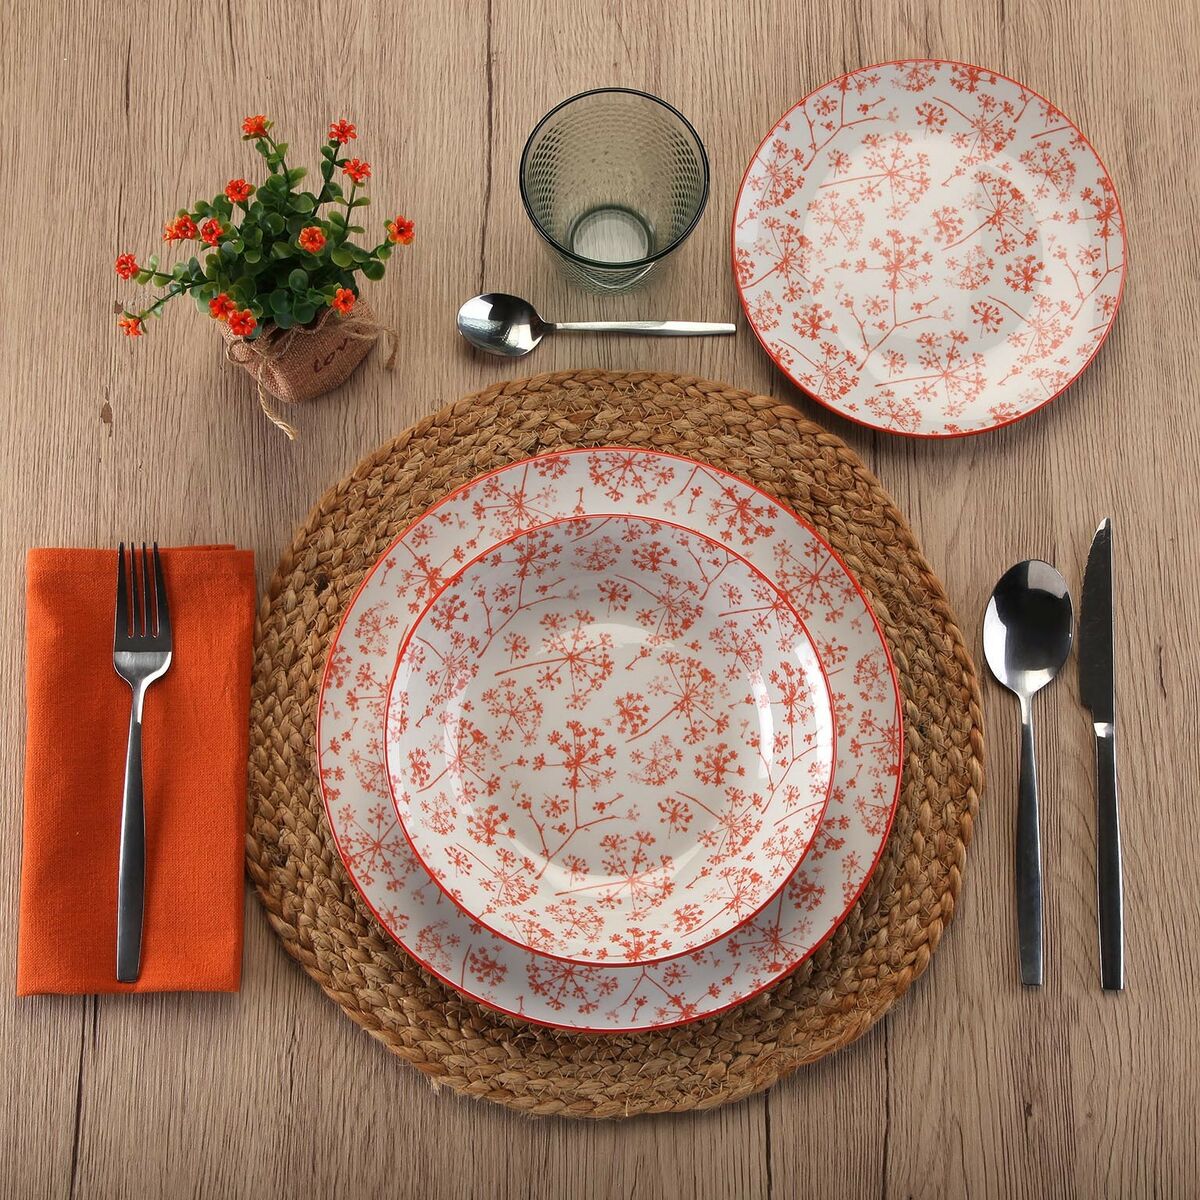 Tableware Versa Lina 18 Pieces Porcelain